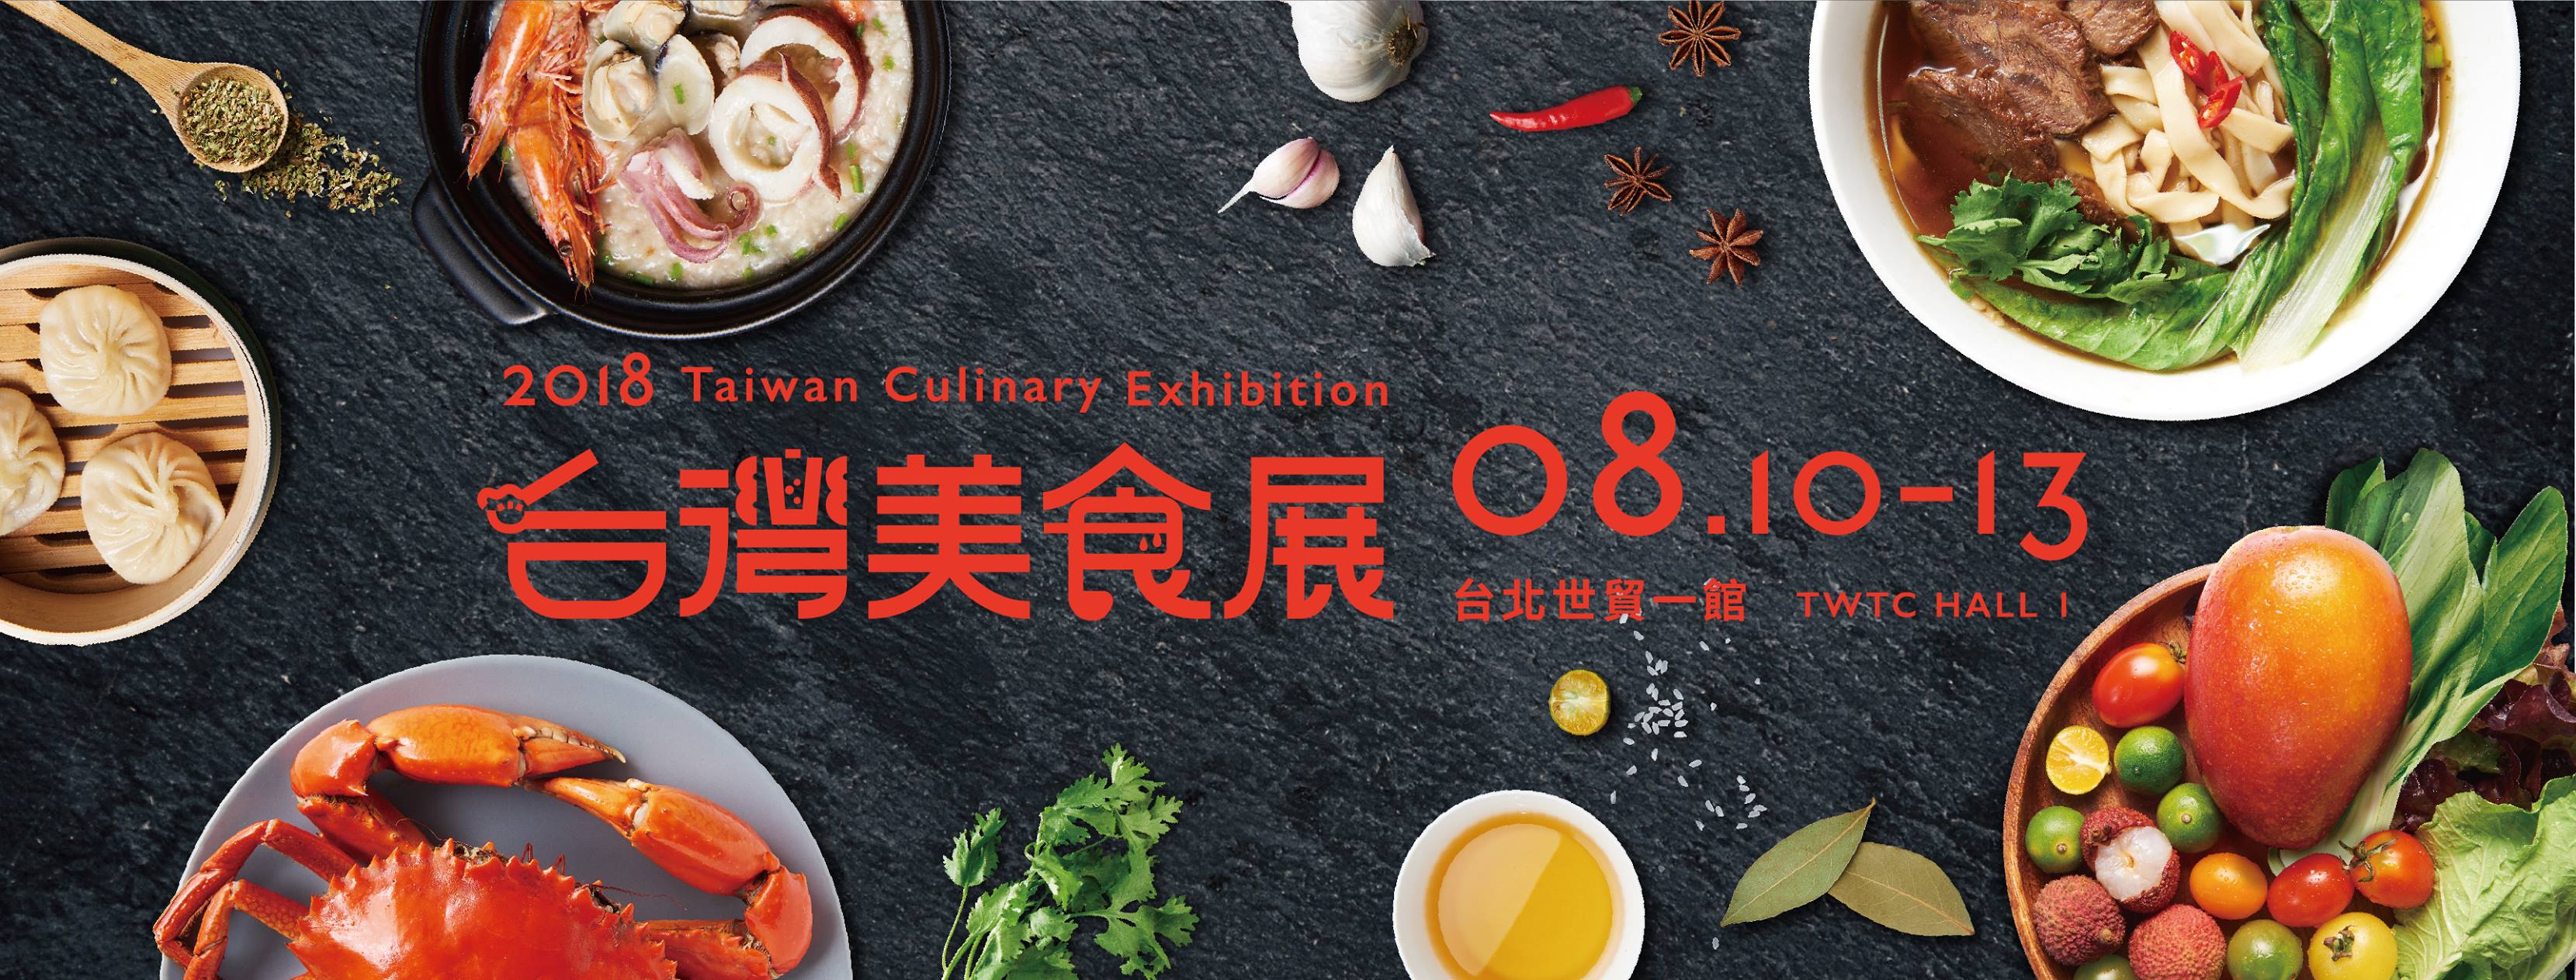 2018 Taiwan Culinary Exhibition